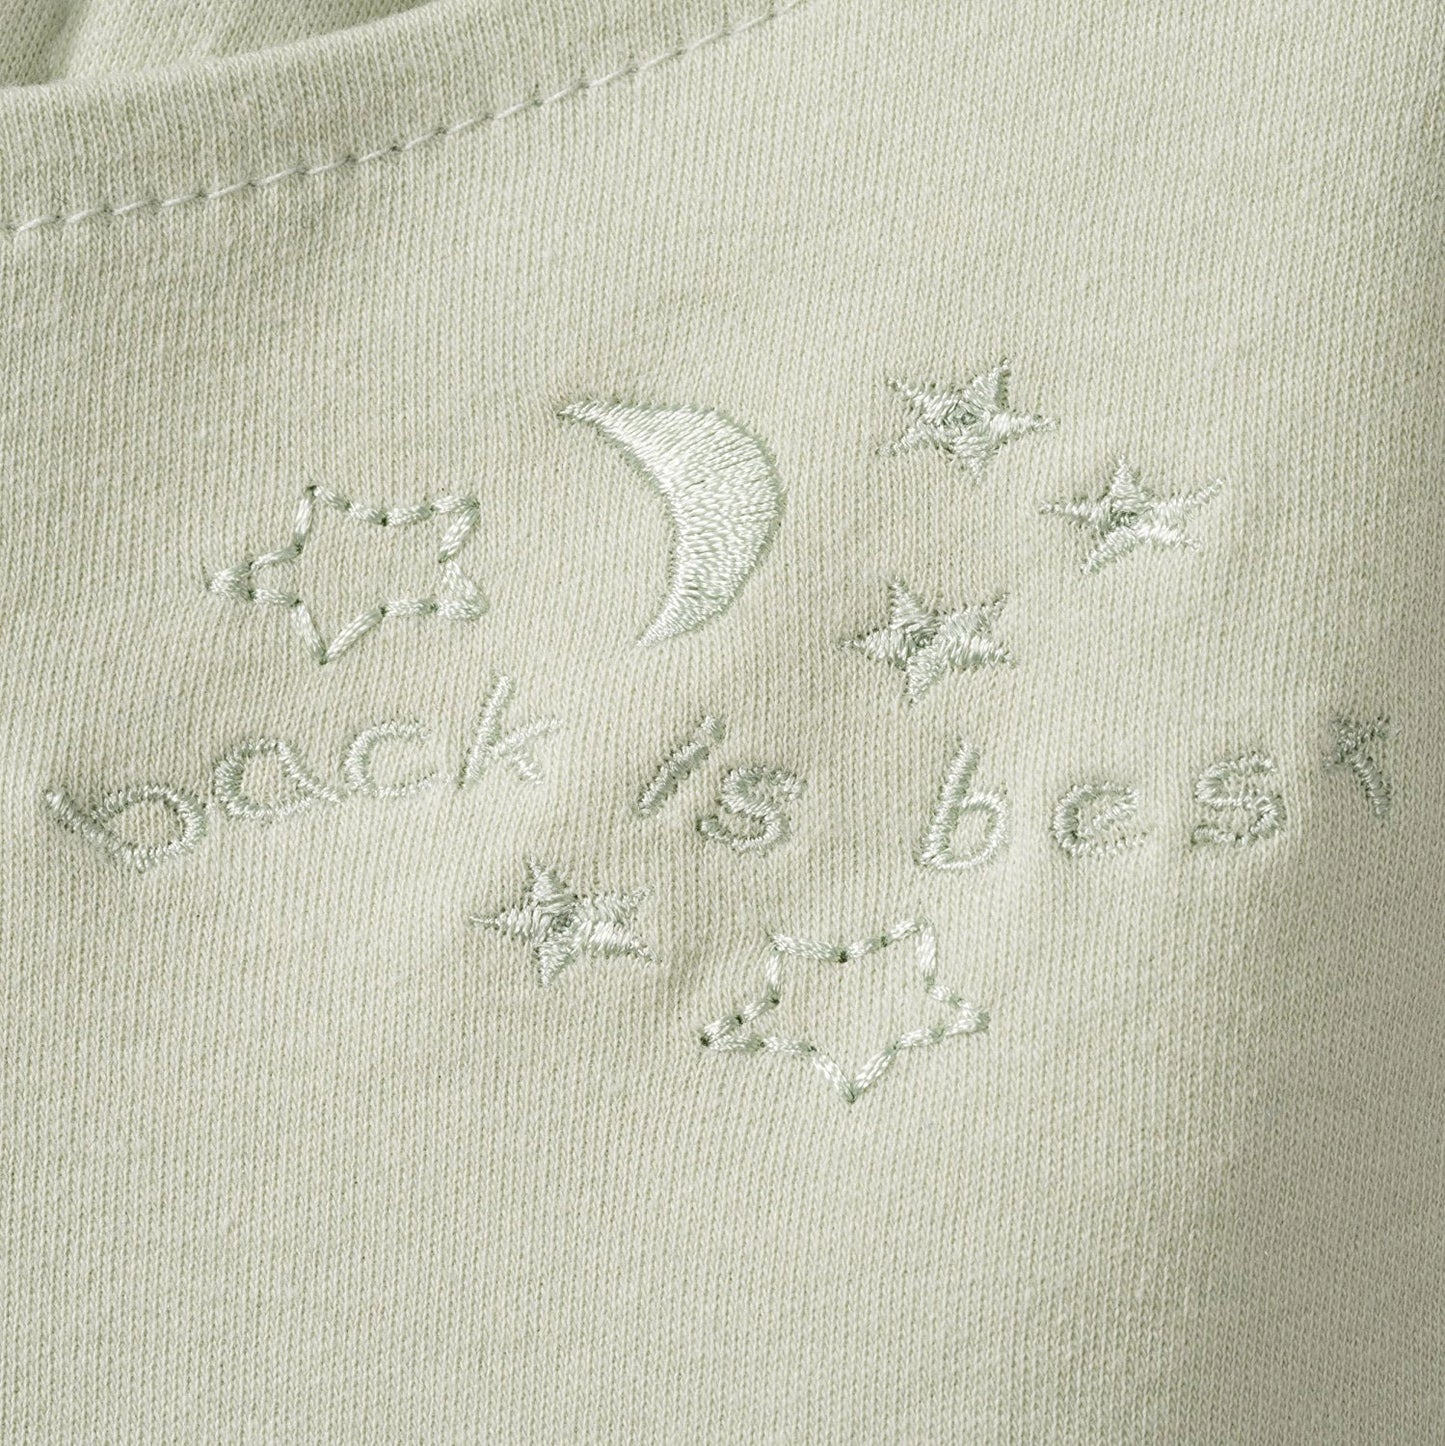 HALO 100% Cotton Sleepsack Swaddle, 3-Way Adjustable Wearable Blanket, TOG 1.5, Clouds, Newborn, 0-3 Months